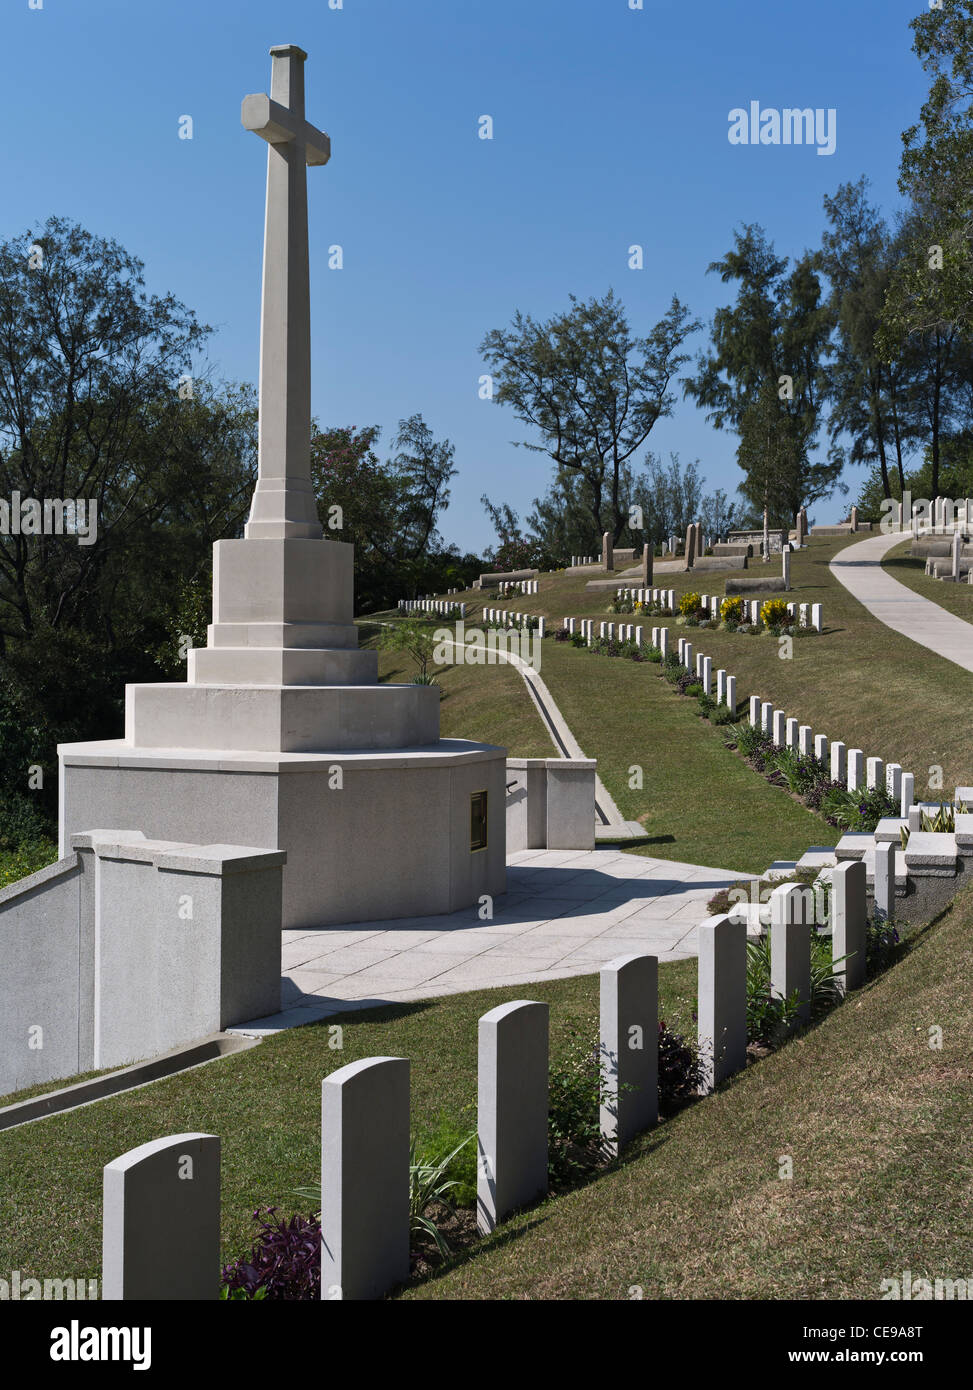 dh japanische Besetzung STANLEY HONG KONG Military historische Grabsteine Memorial Kreuz Weltkrieg zwei japan Geschichte Friedhof Stockfoto